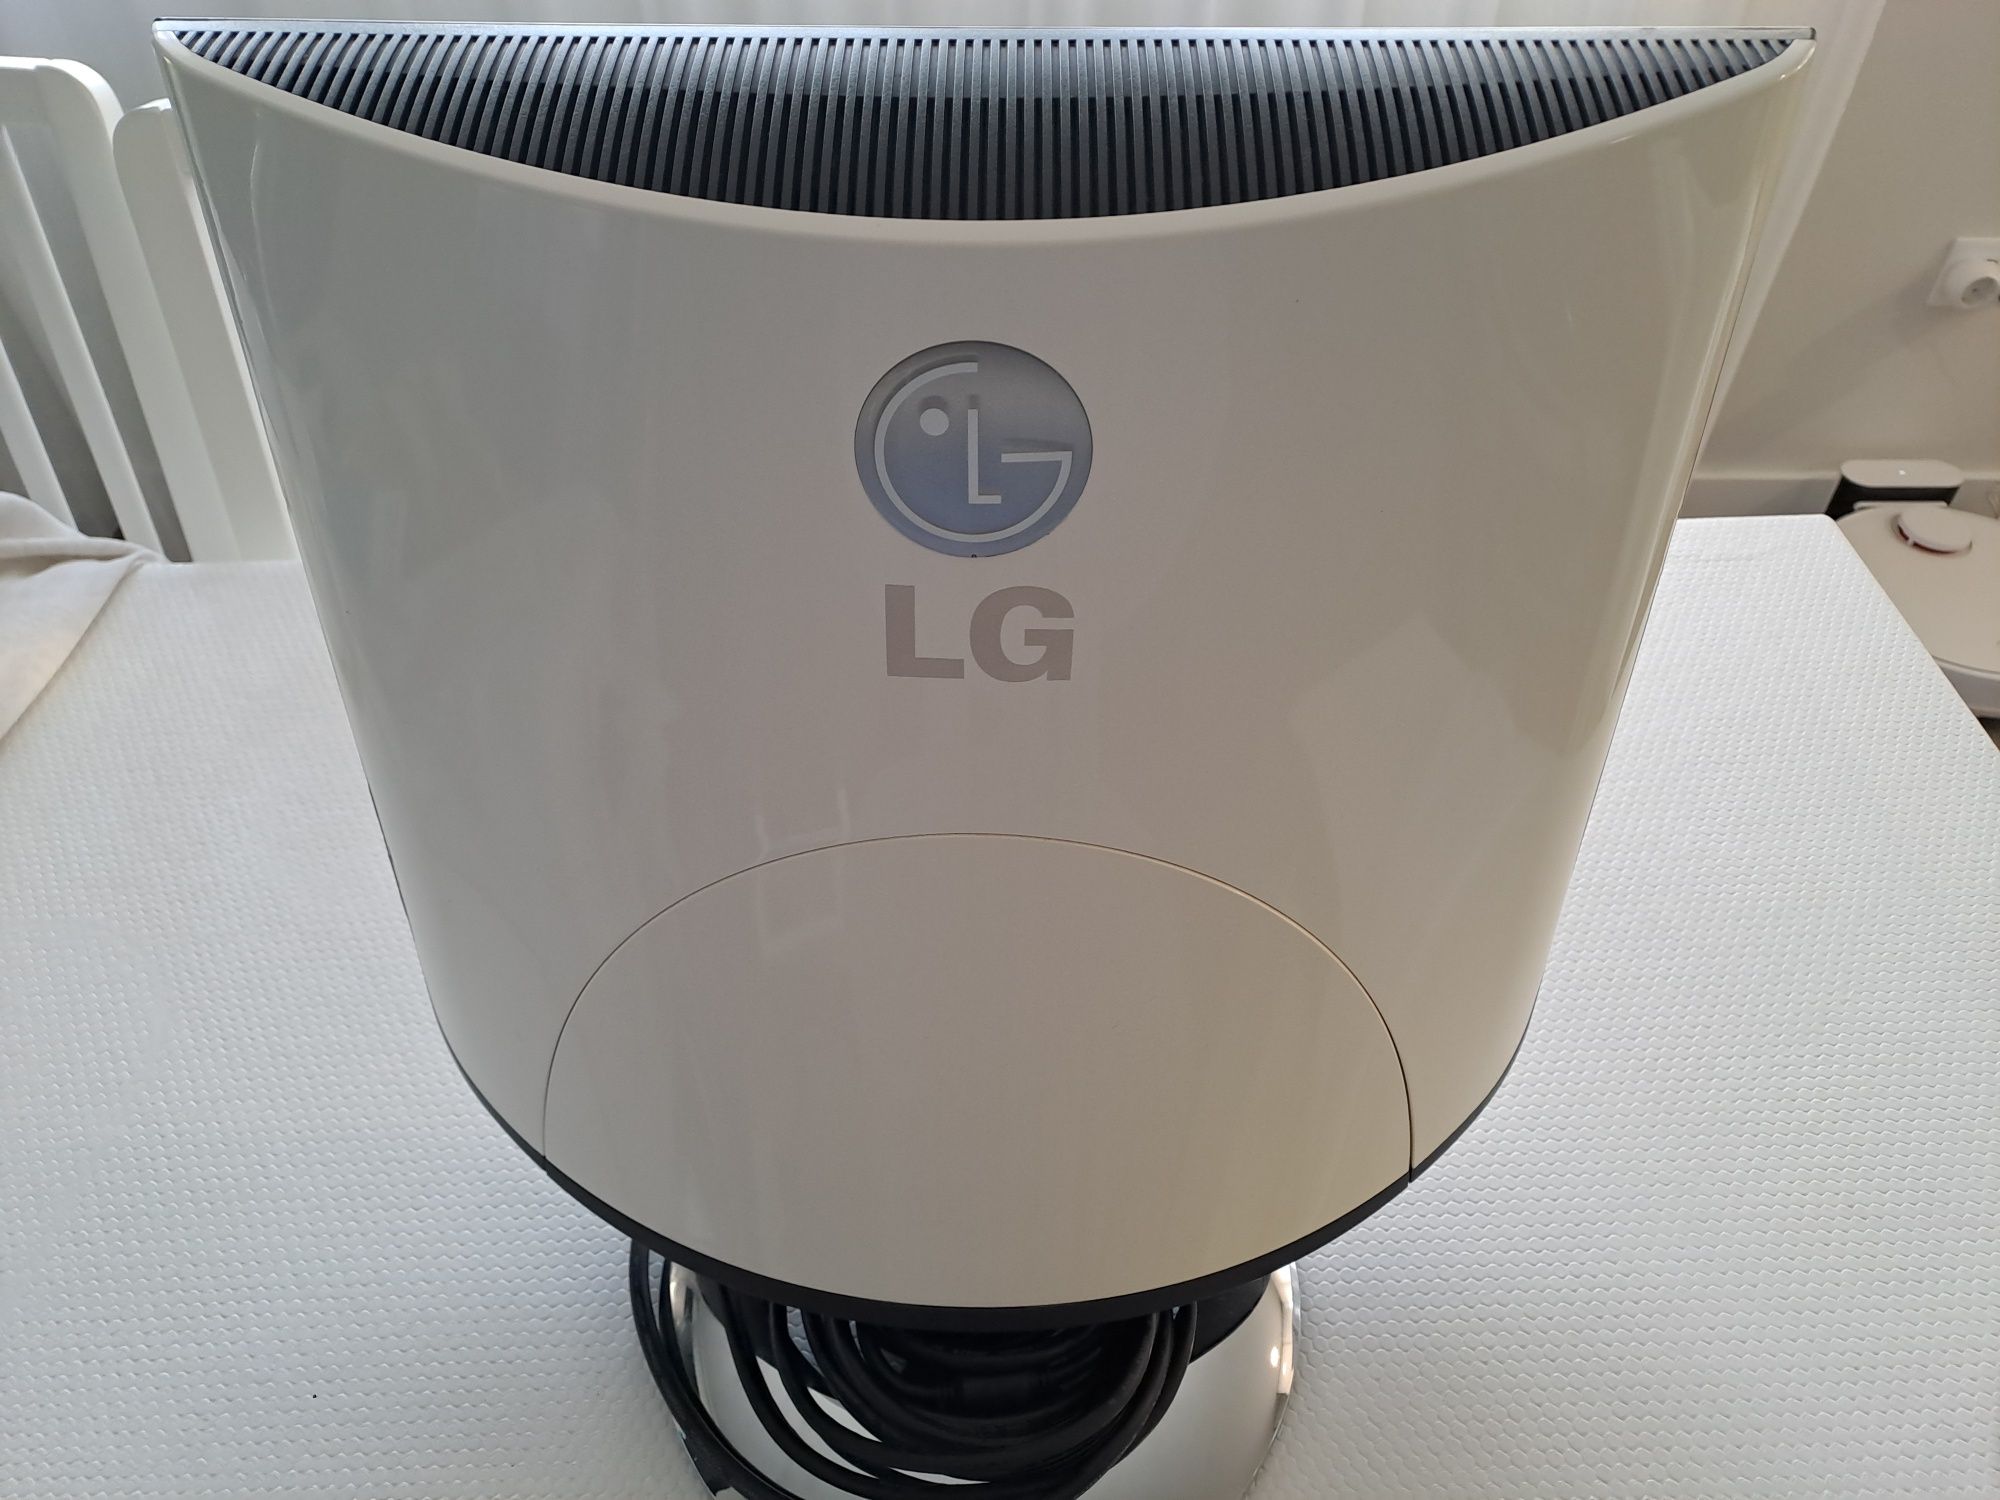 Monitor LG LX40 50 Hz